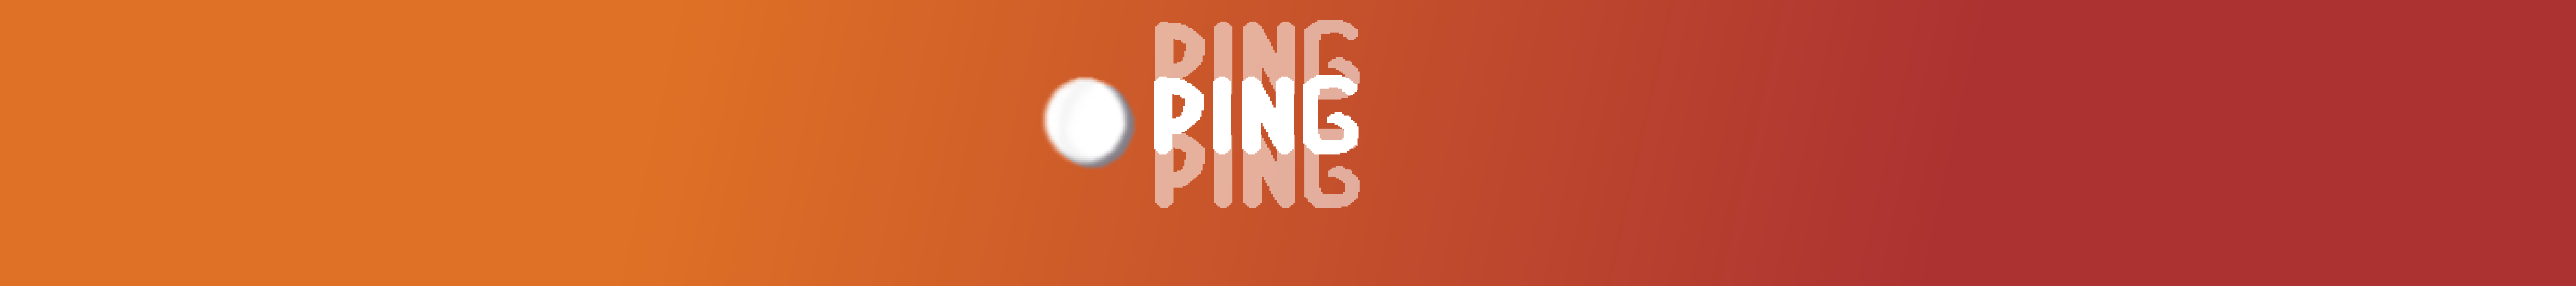 PingPingPing